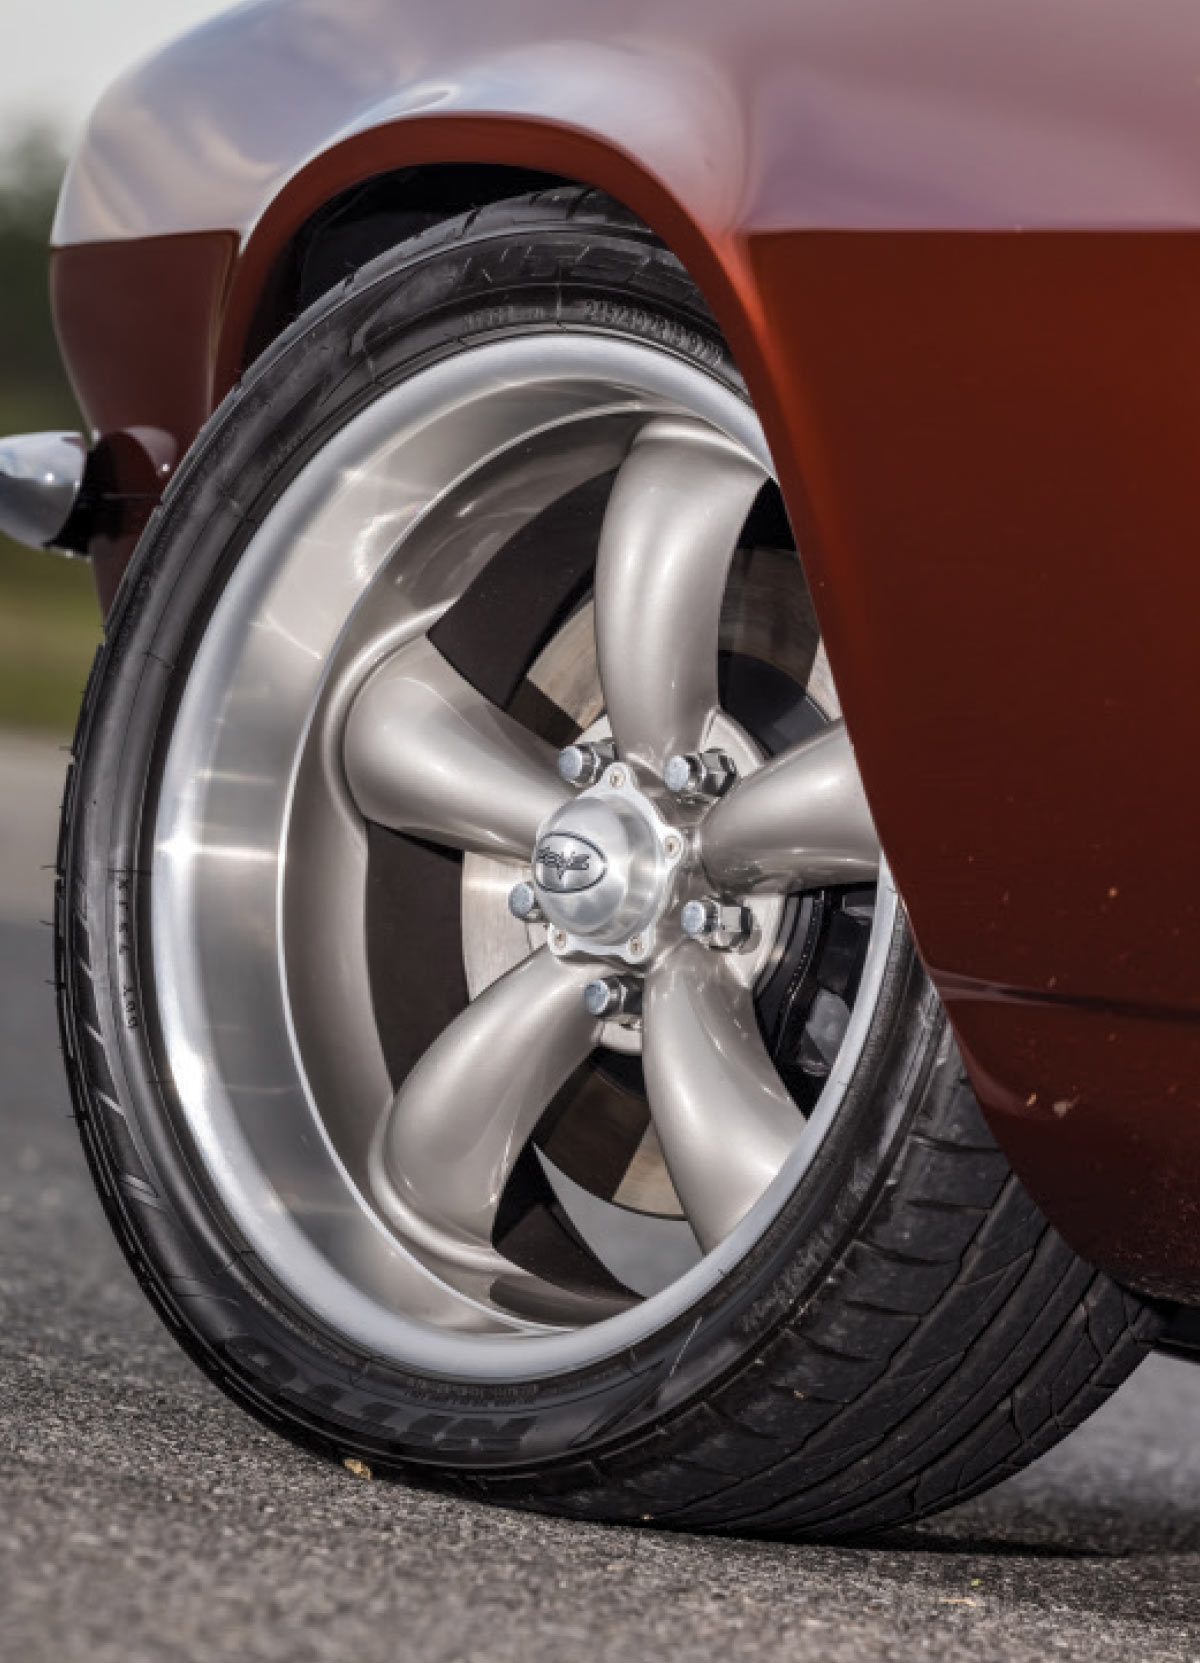 ’72 Chevy Camaro's rim and tires